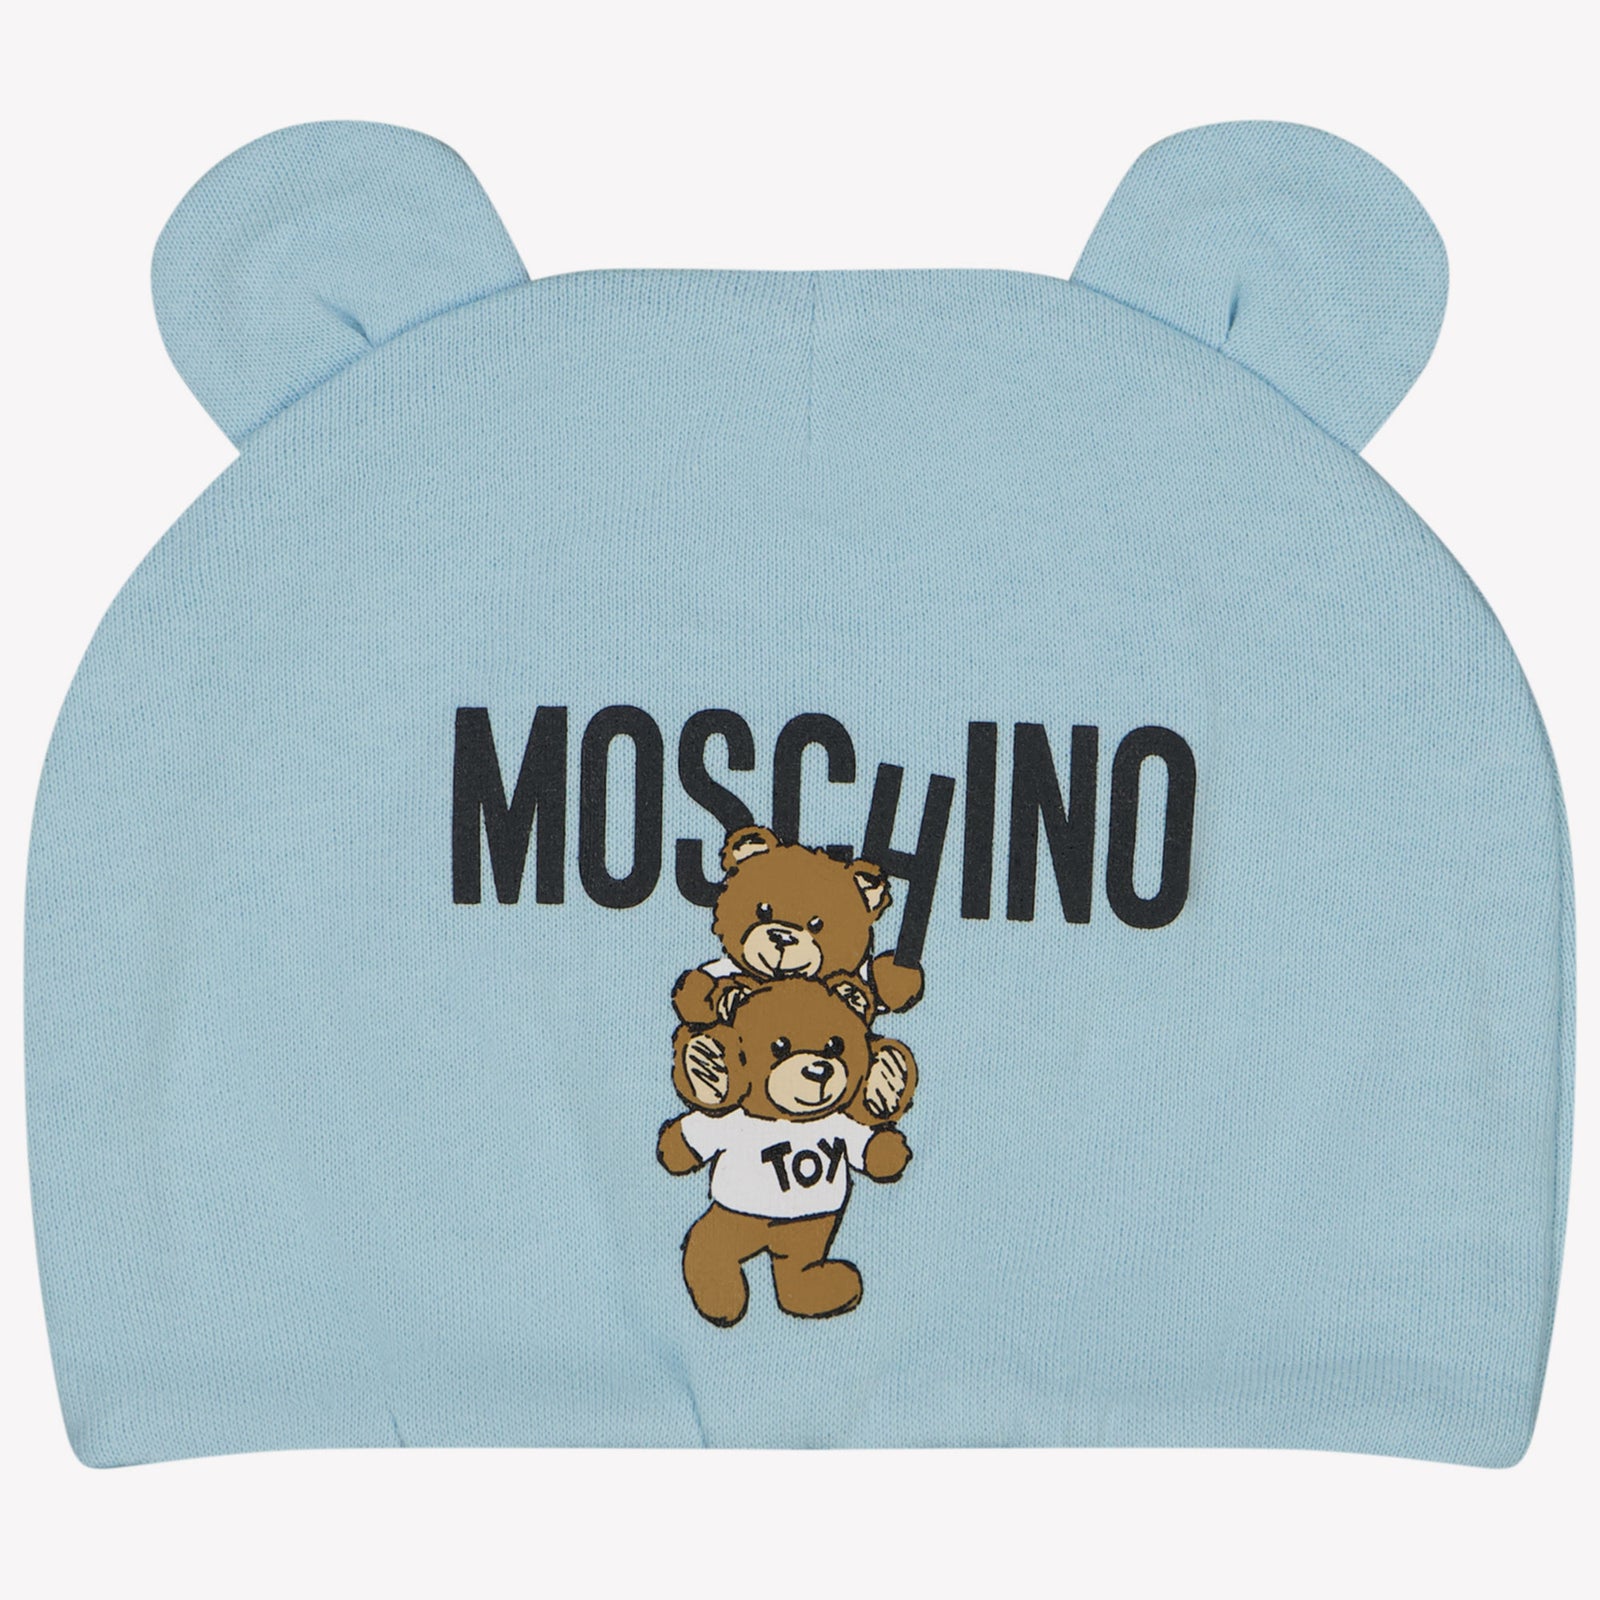 Moschino Baby Unisex hat Light Blue